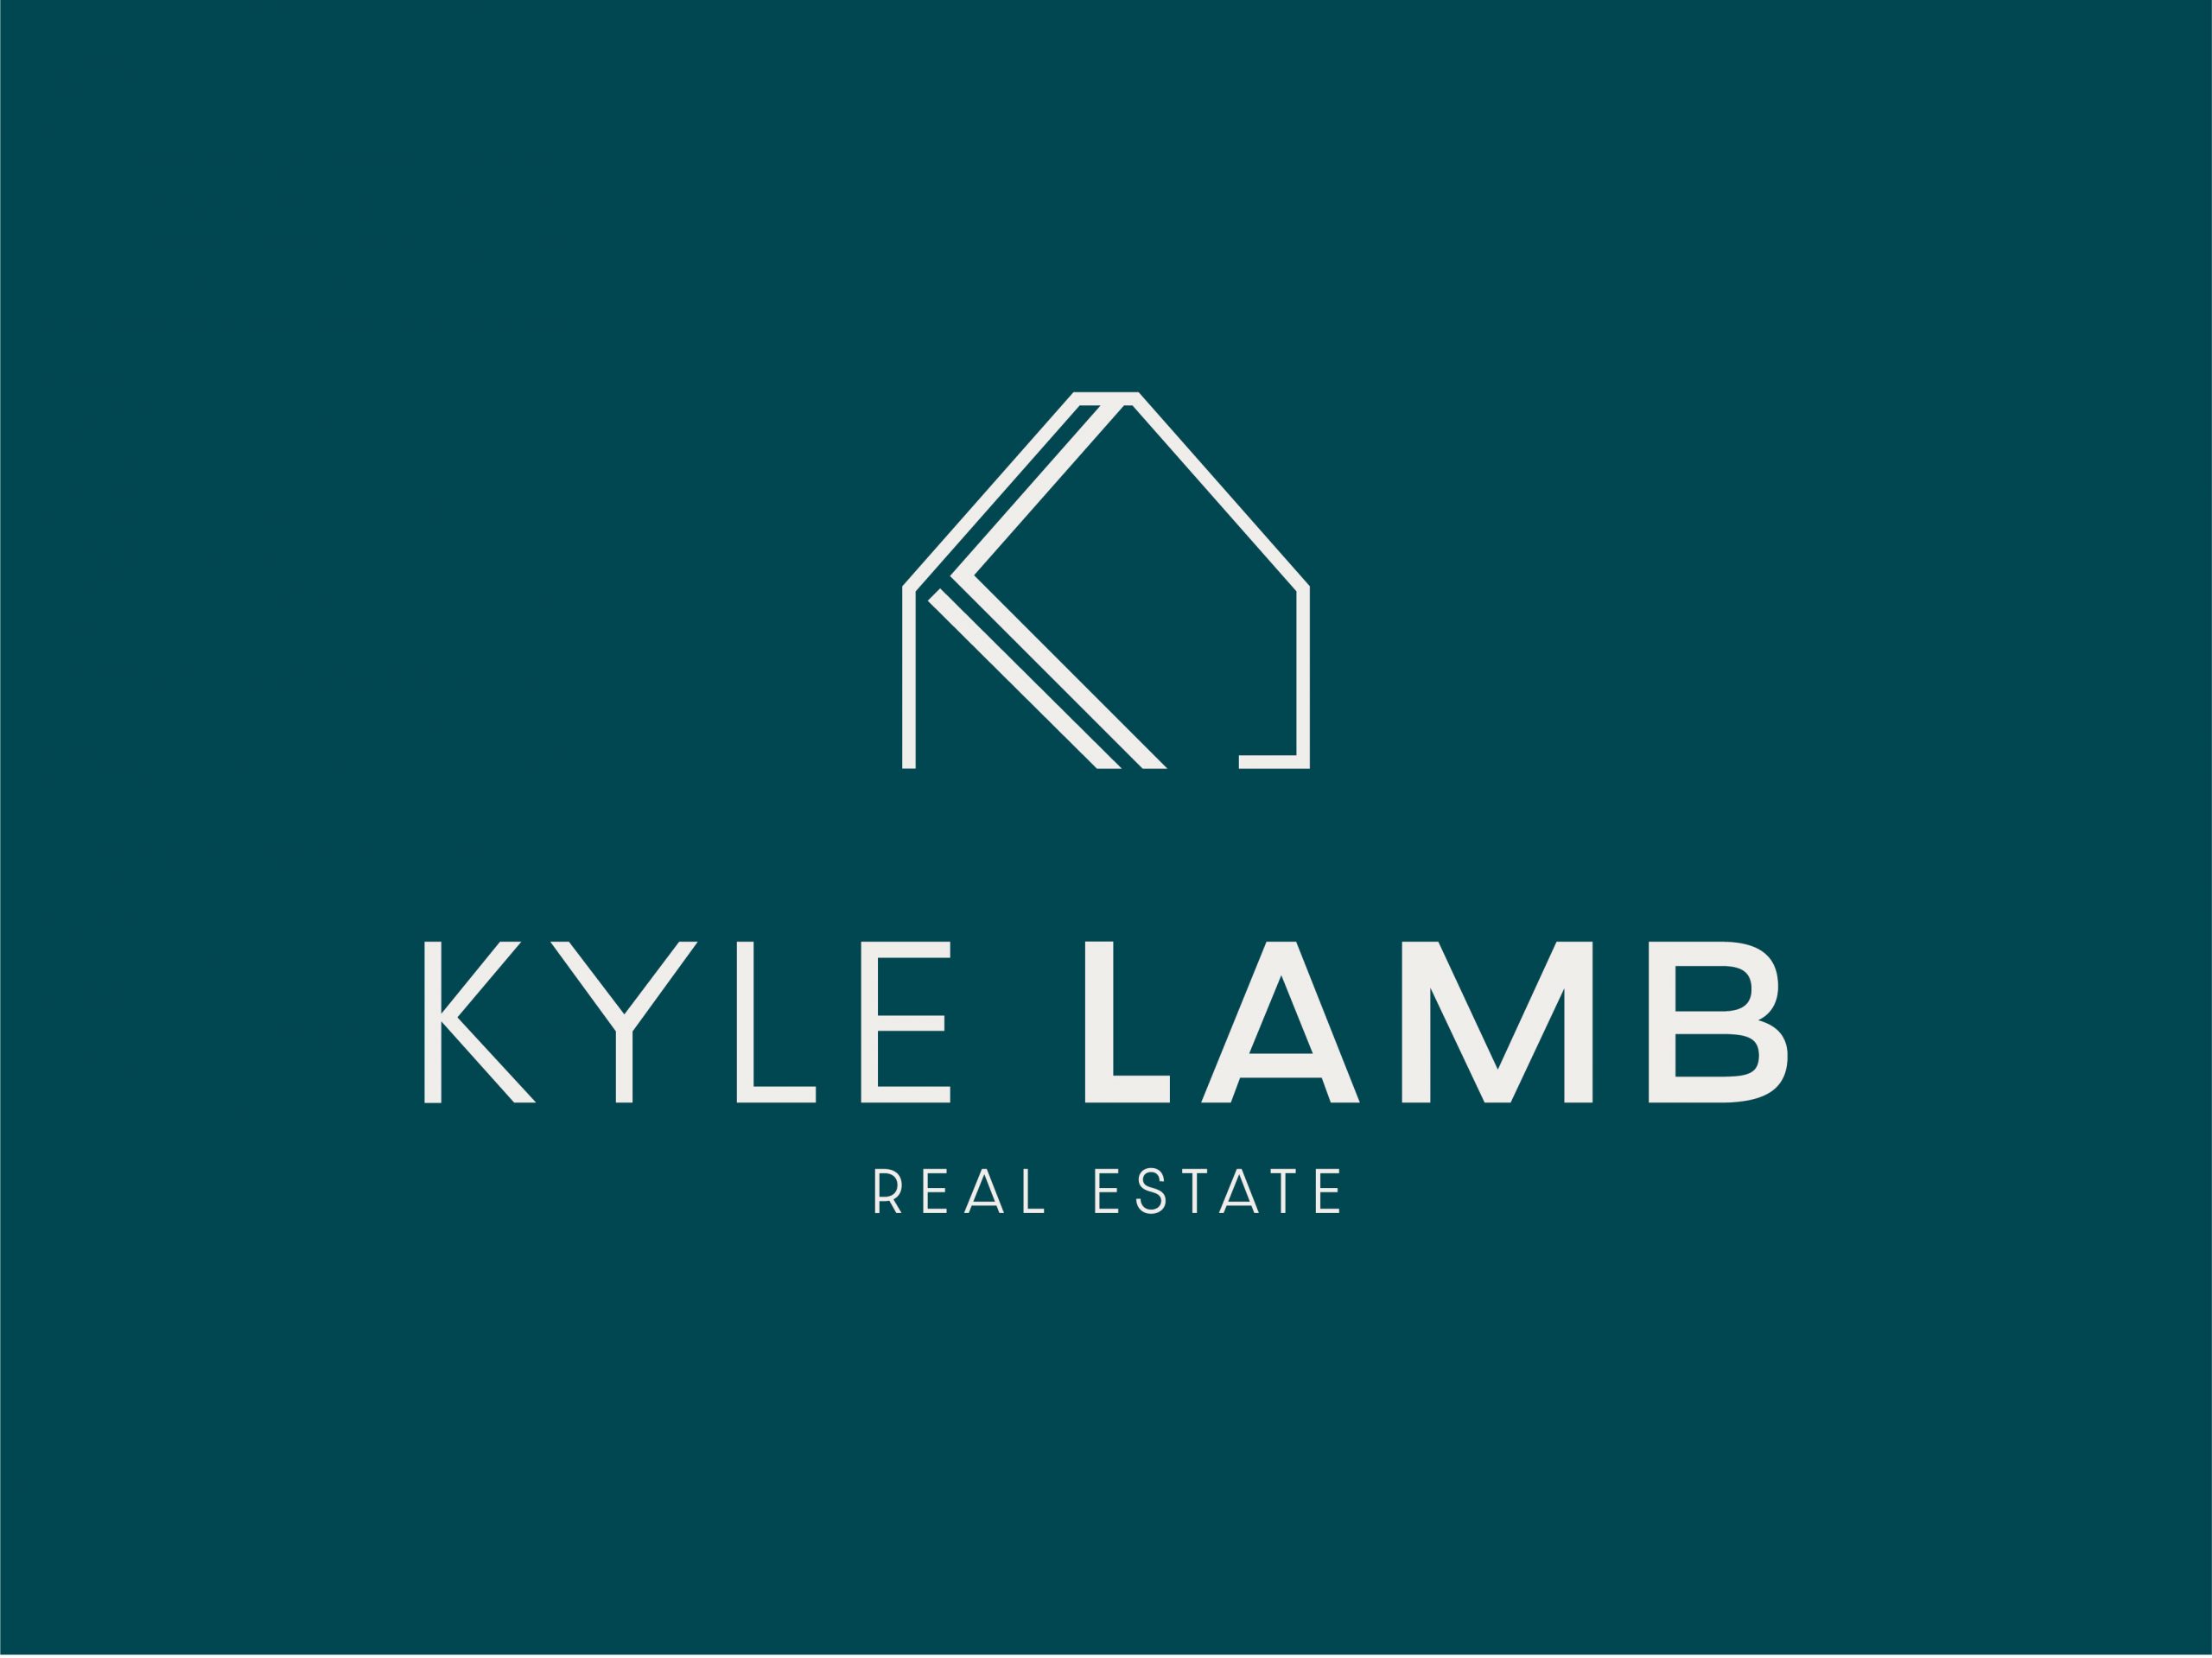 Kyle Lamb white logo on blue background - White canvas design